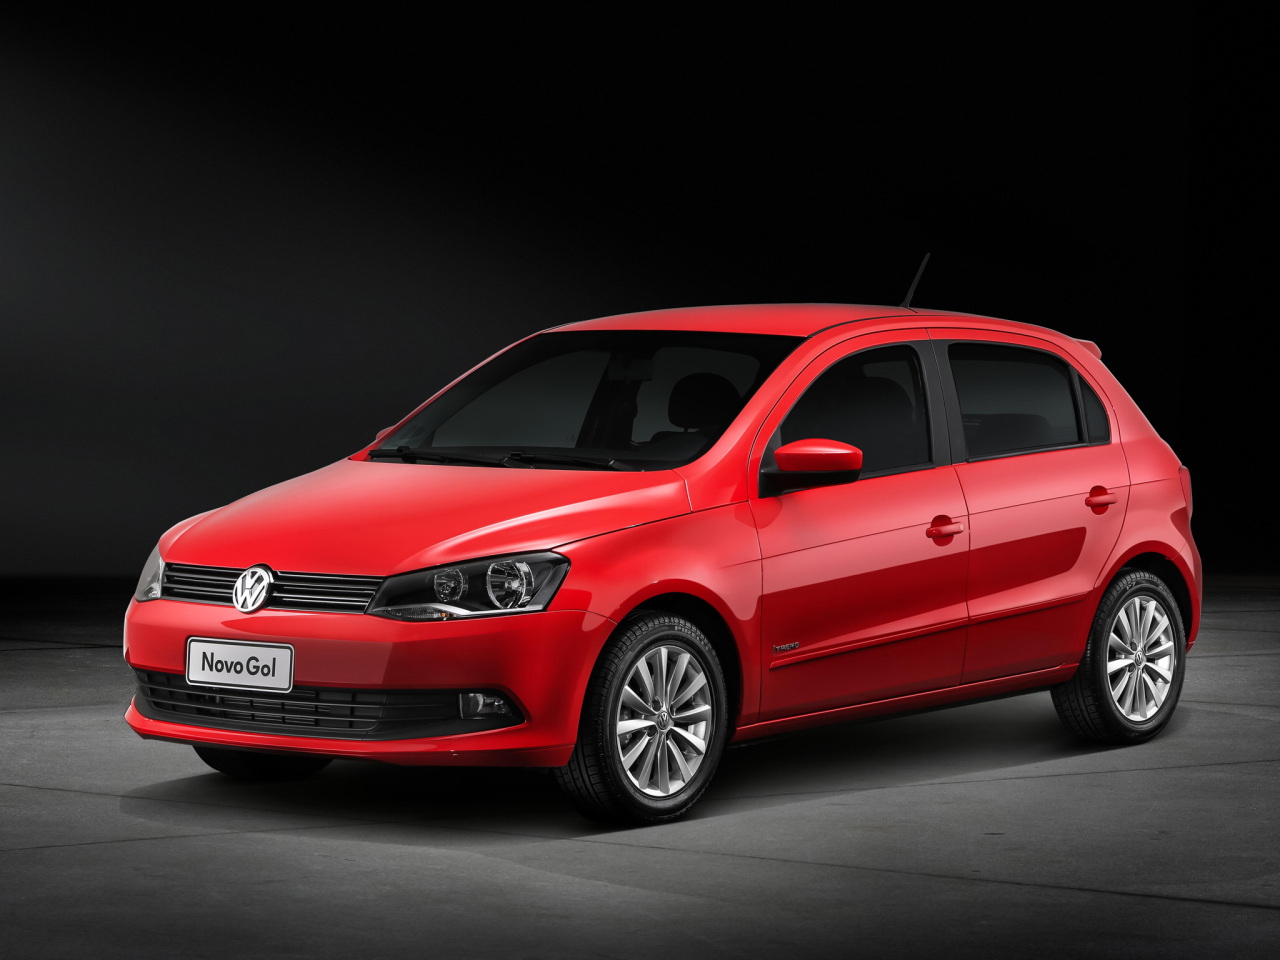 Volkswagen Gol primeste un facelift care il aduce in linie cu europeanul VW Polo